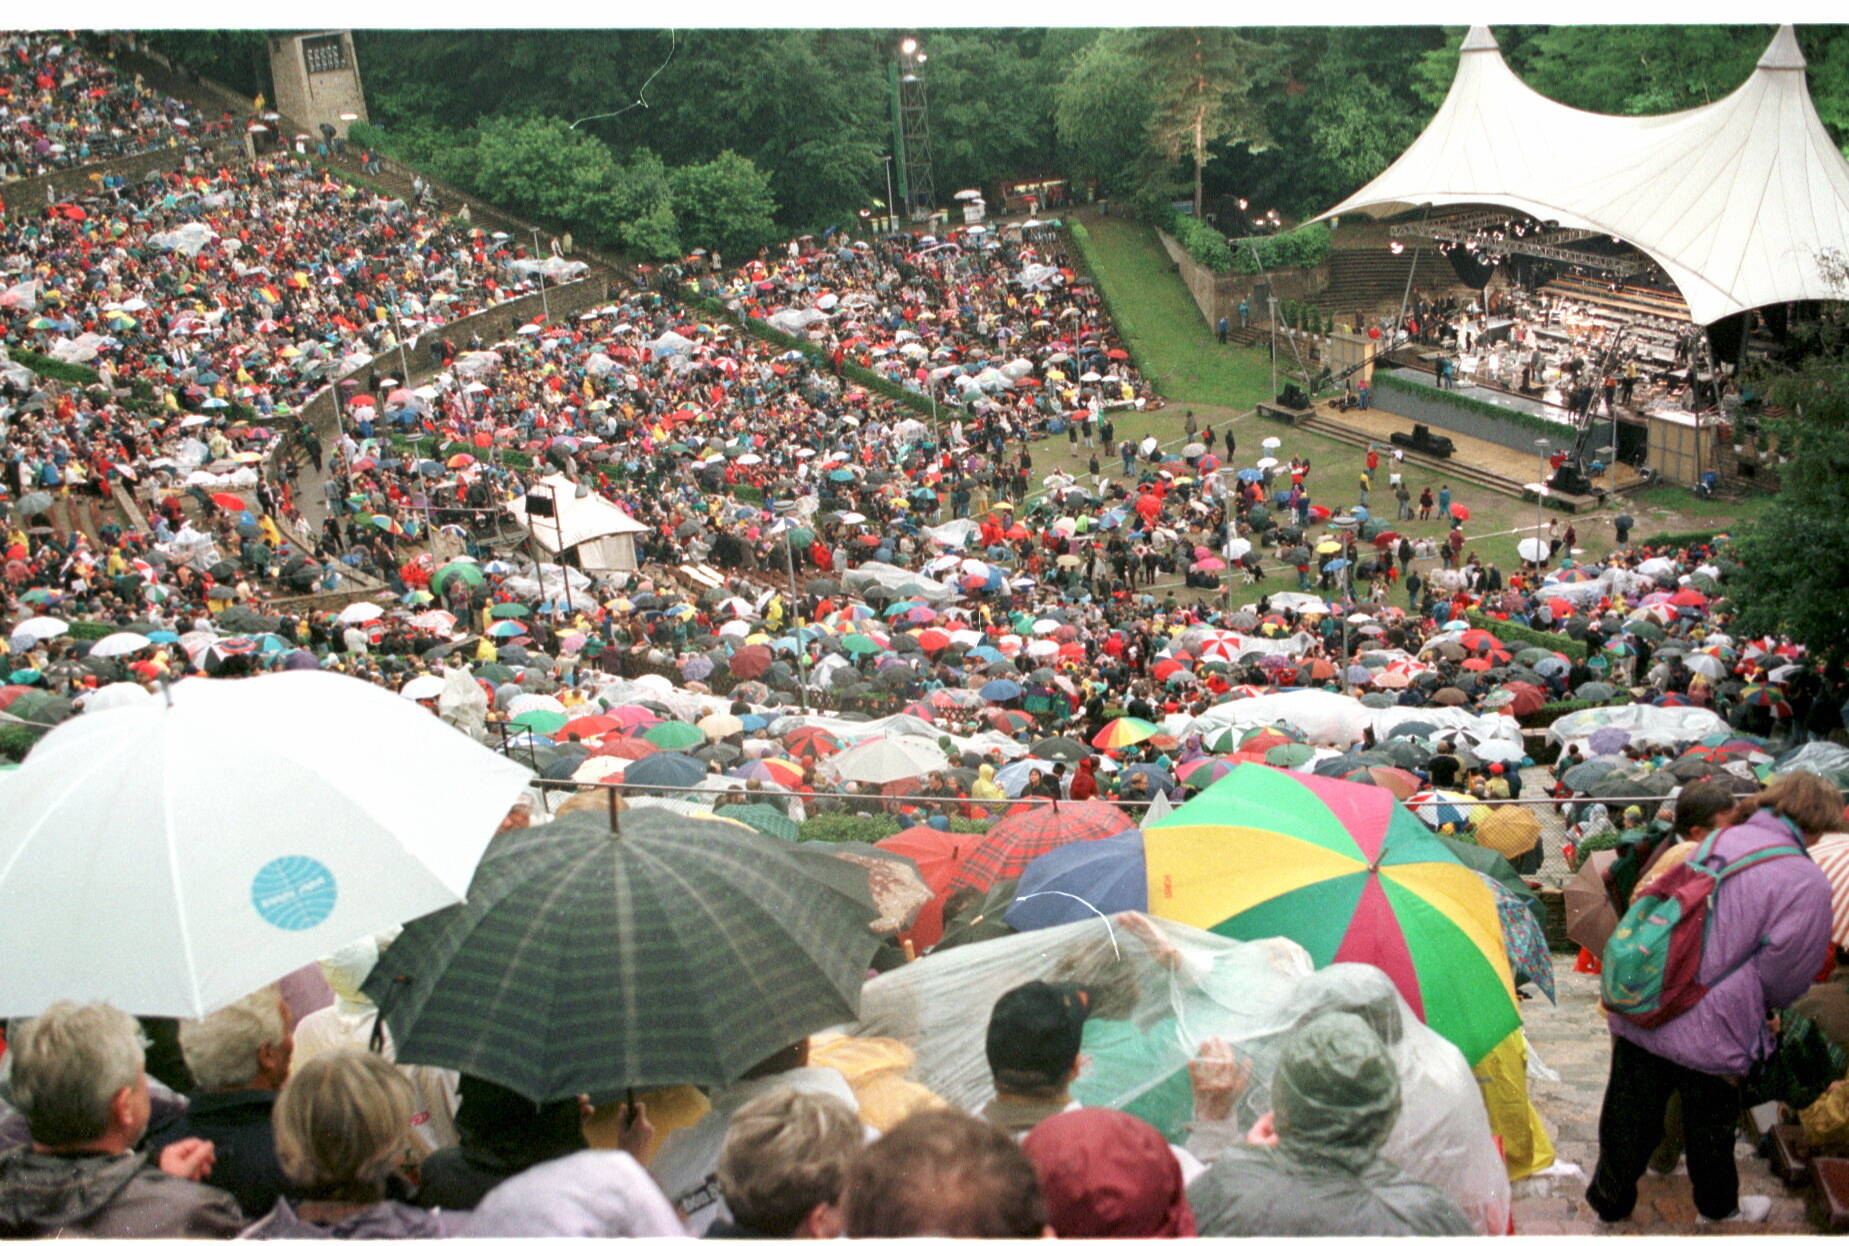 Regen in Berlin: Publikum in der Berliner Waldbühne bei Regen, 1996. Foto: Imago/Brigani-Art